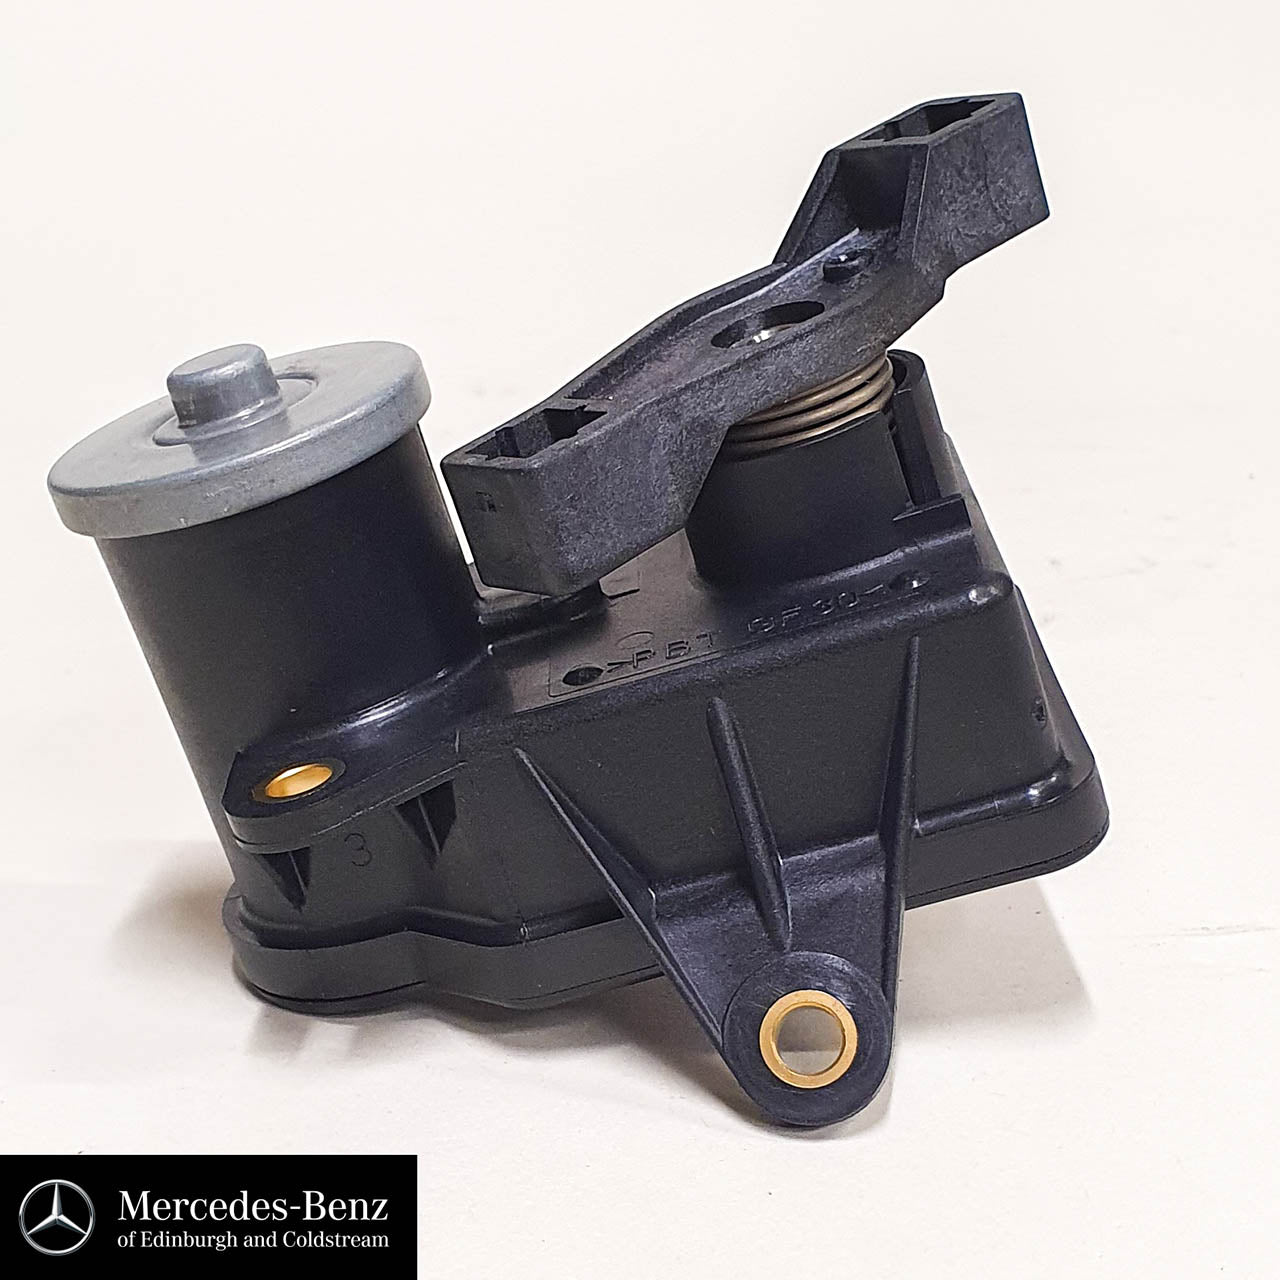 Genuine Mercedes-Benz Inlet Port Shut Off actuator motor Mercedes OM642 A6421500594